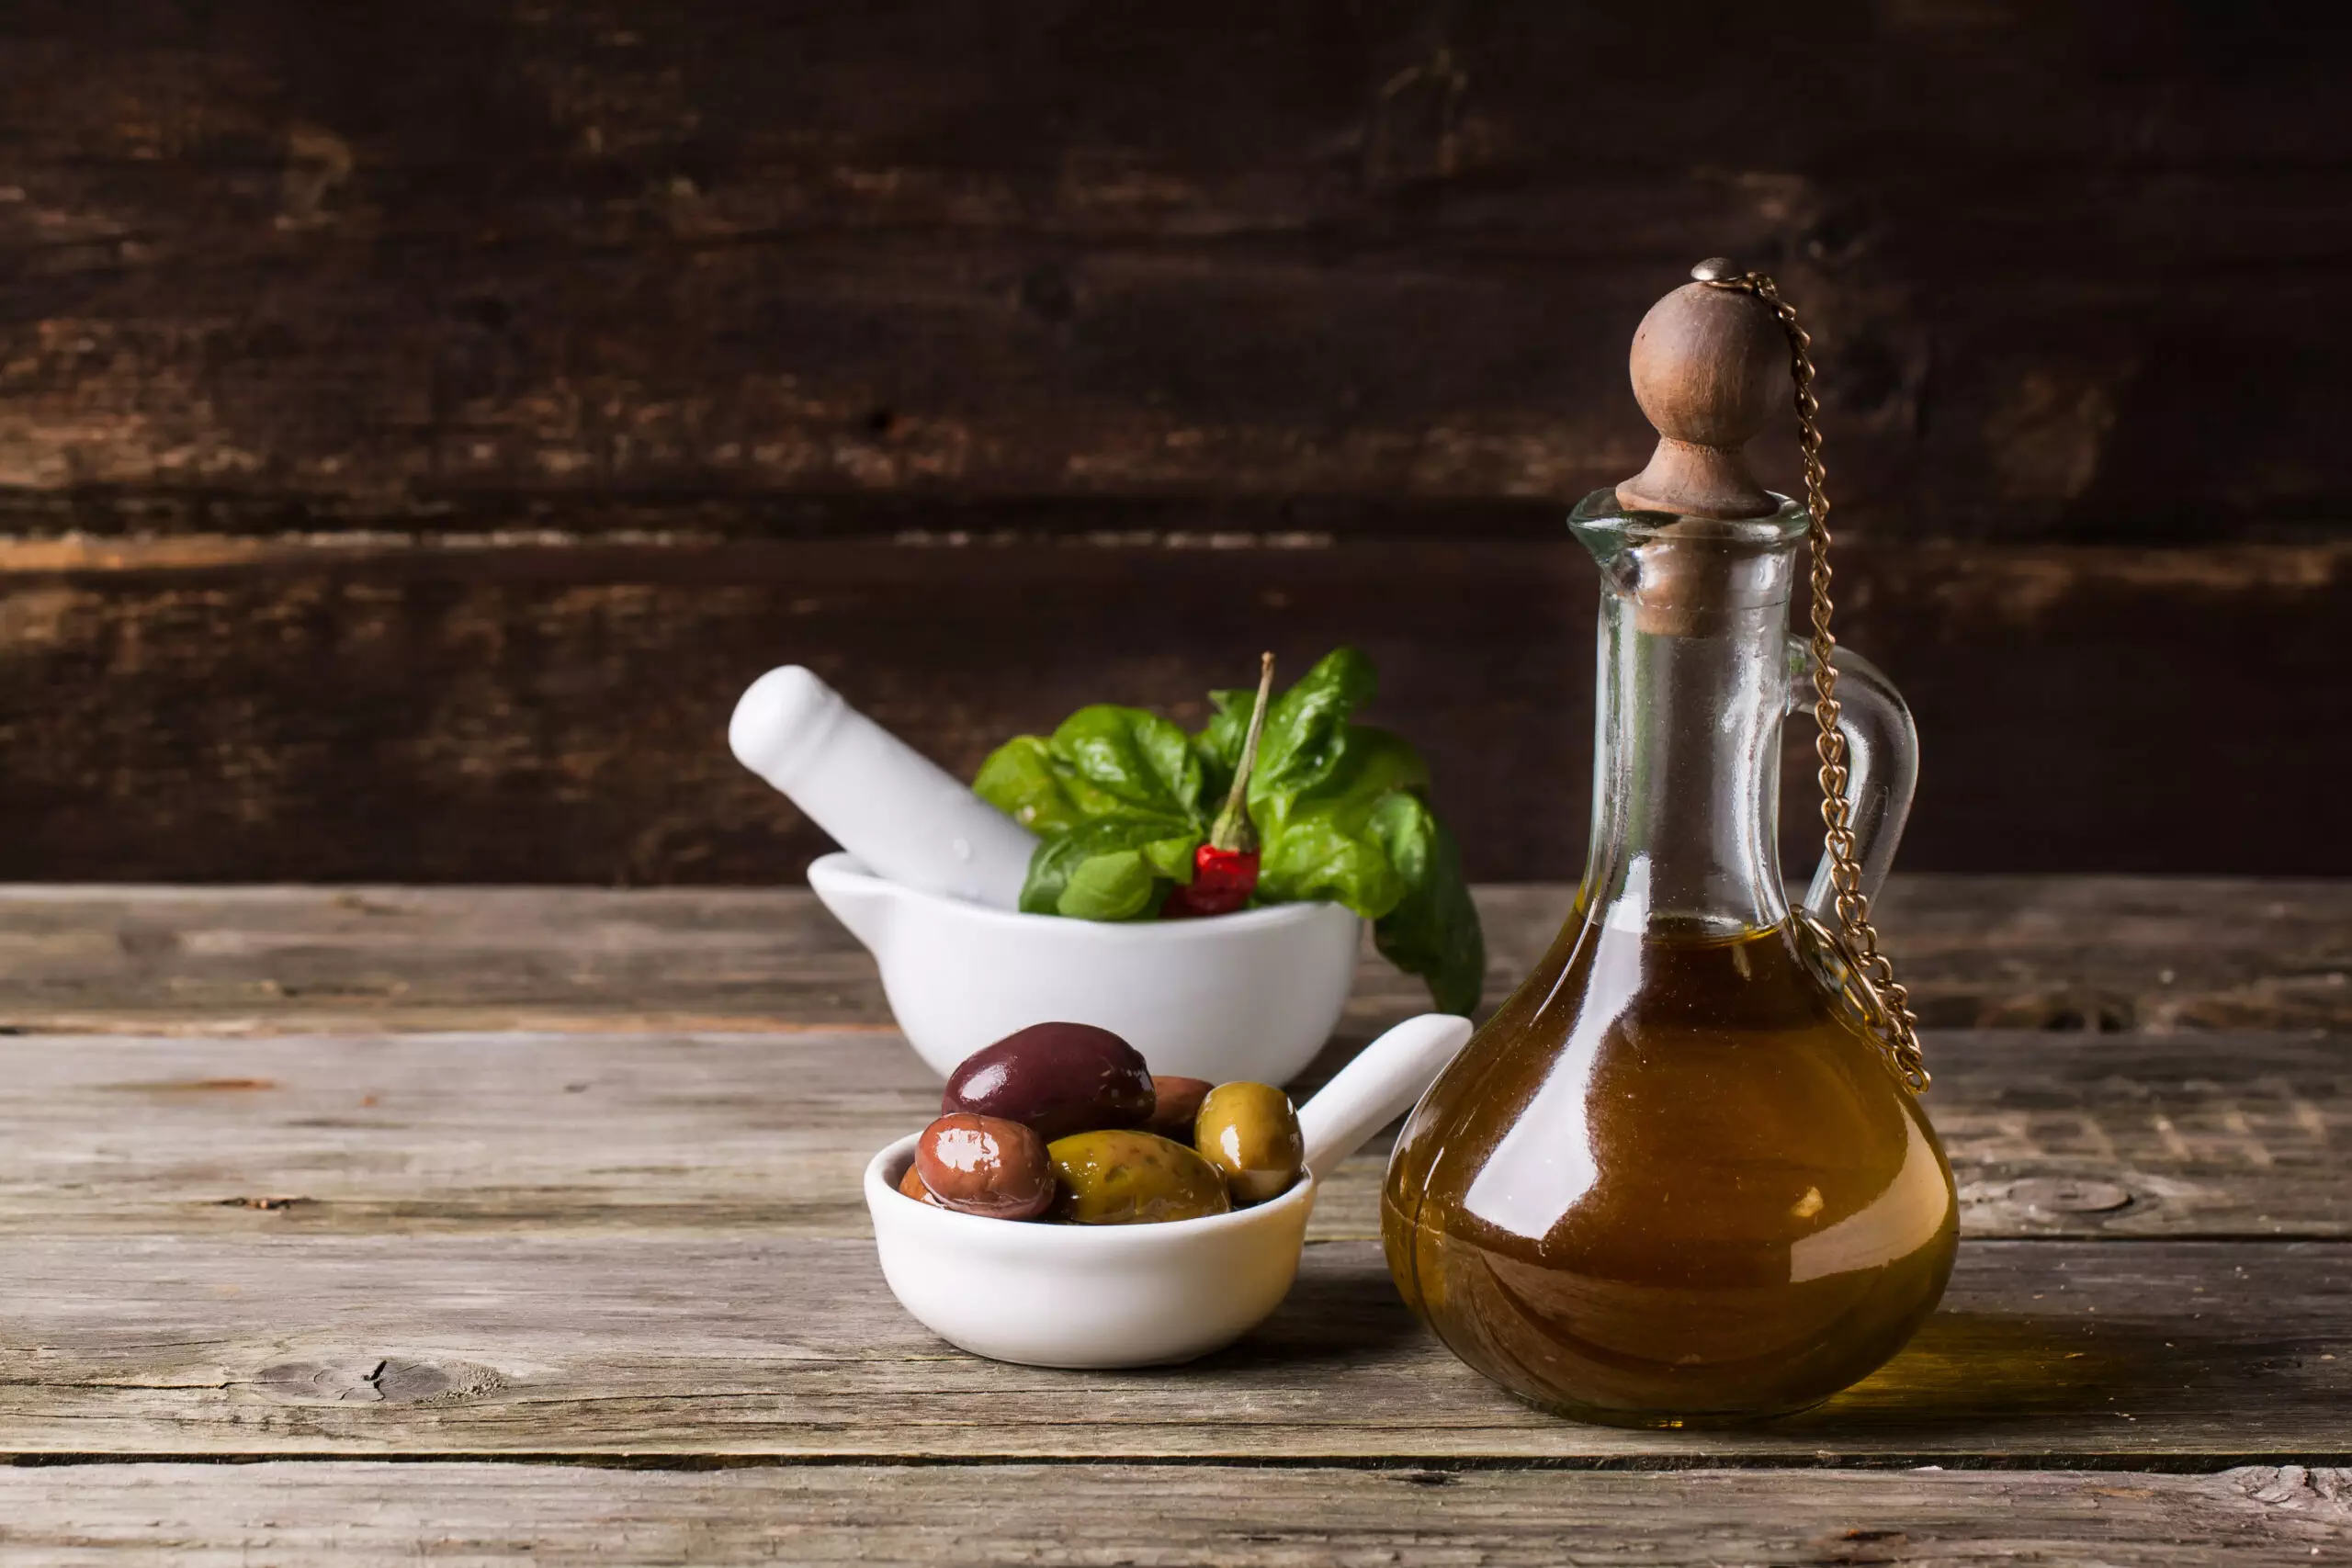 Olive oil, olives, pestle, and basil on wood.